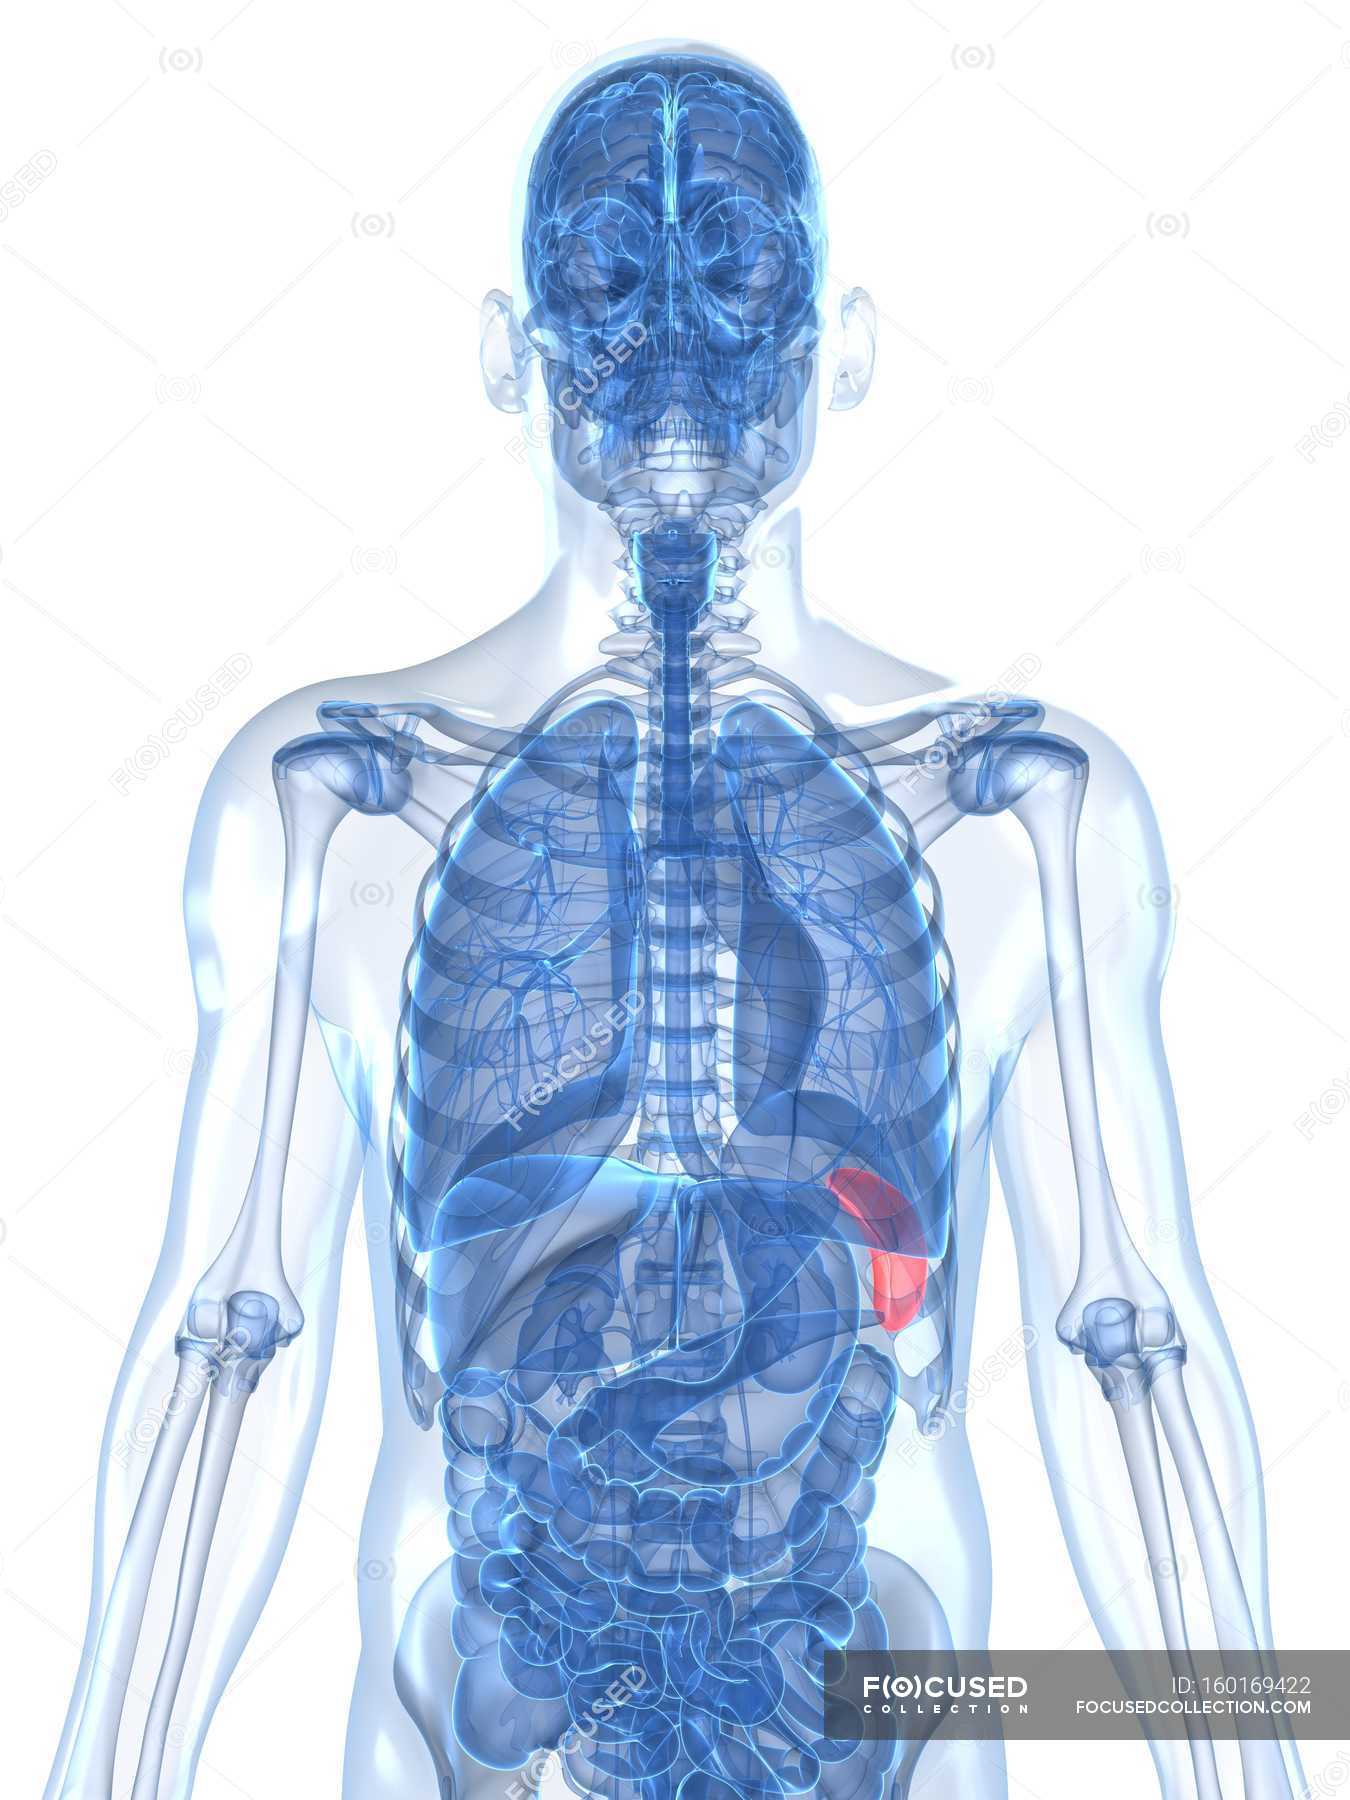 View of Healthy spleen — xray, internal organ - Stock Photo | #160169422